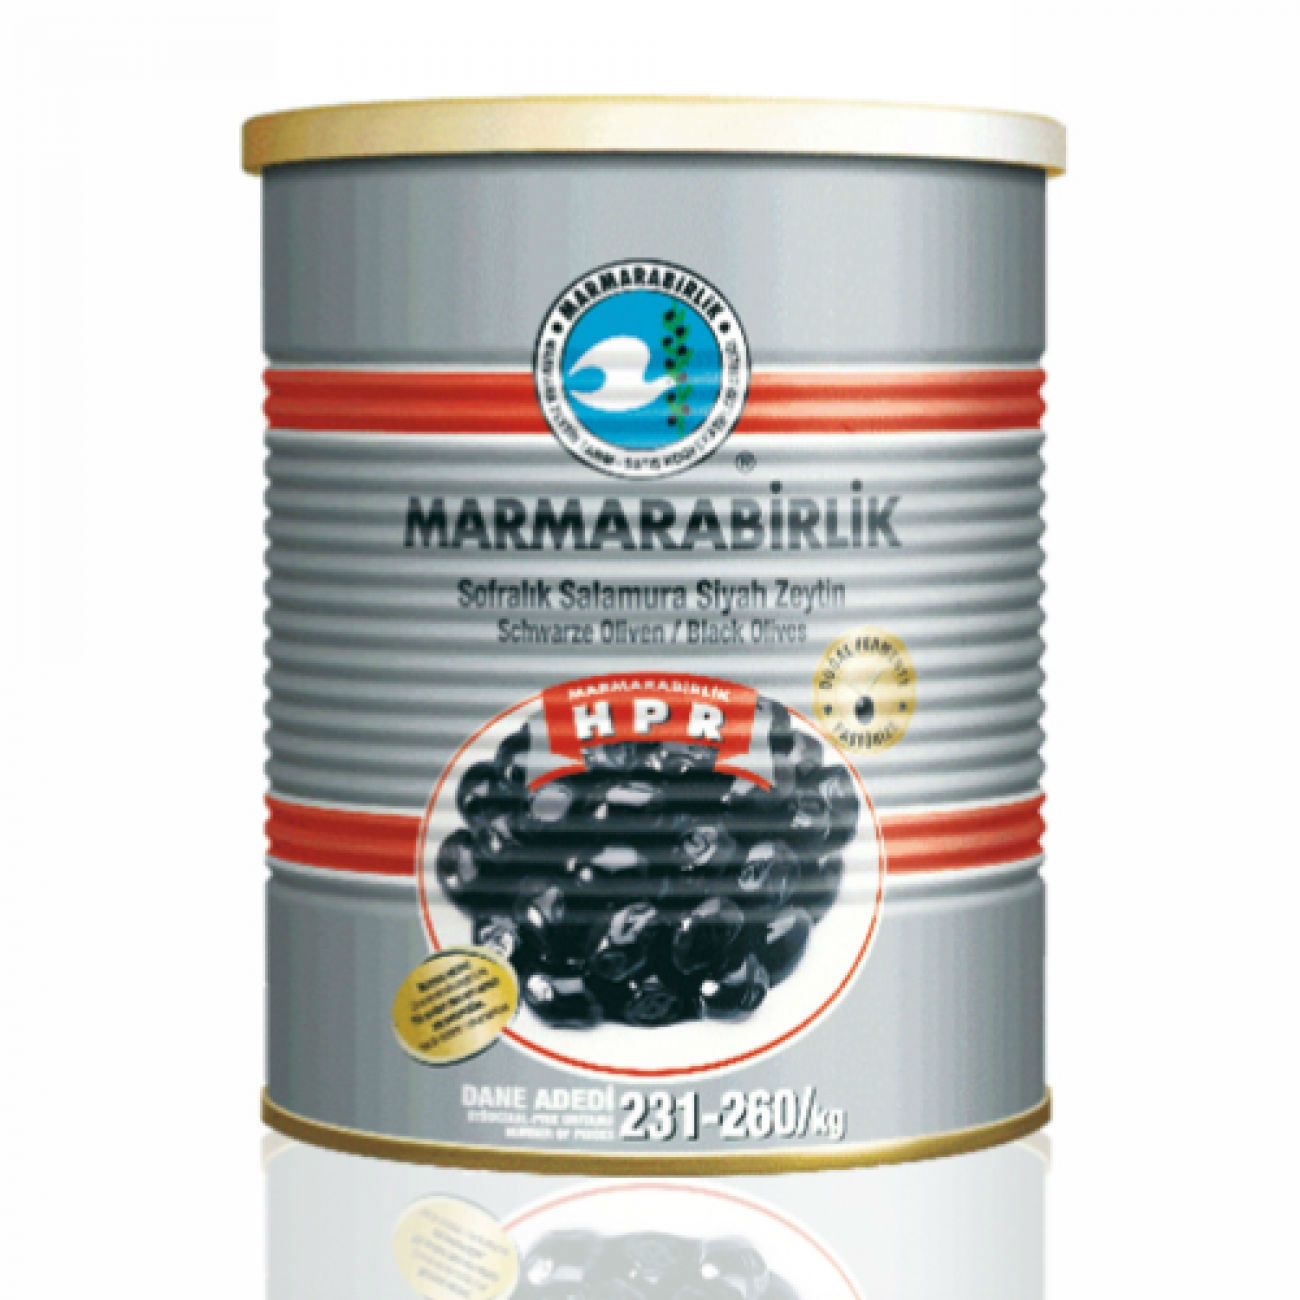 Marmara Birlik Gemlik Hiper Olives (400G) - Aytac Foods